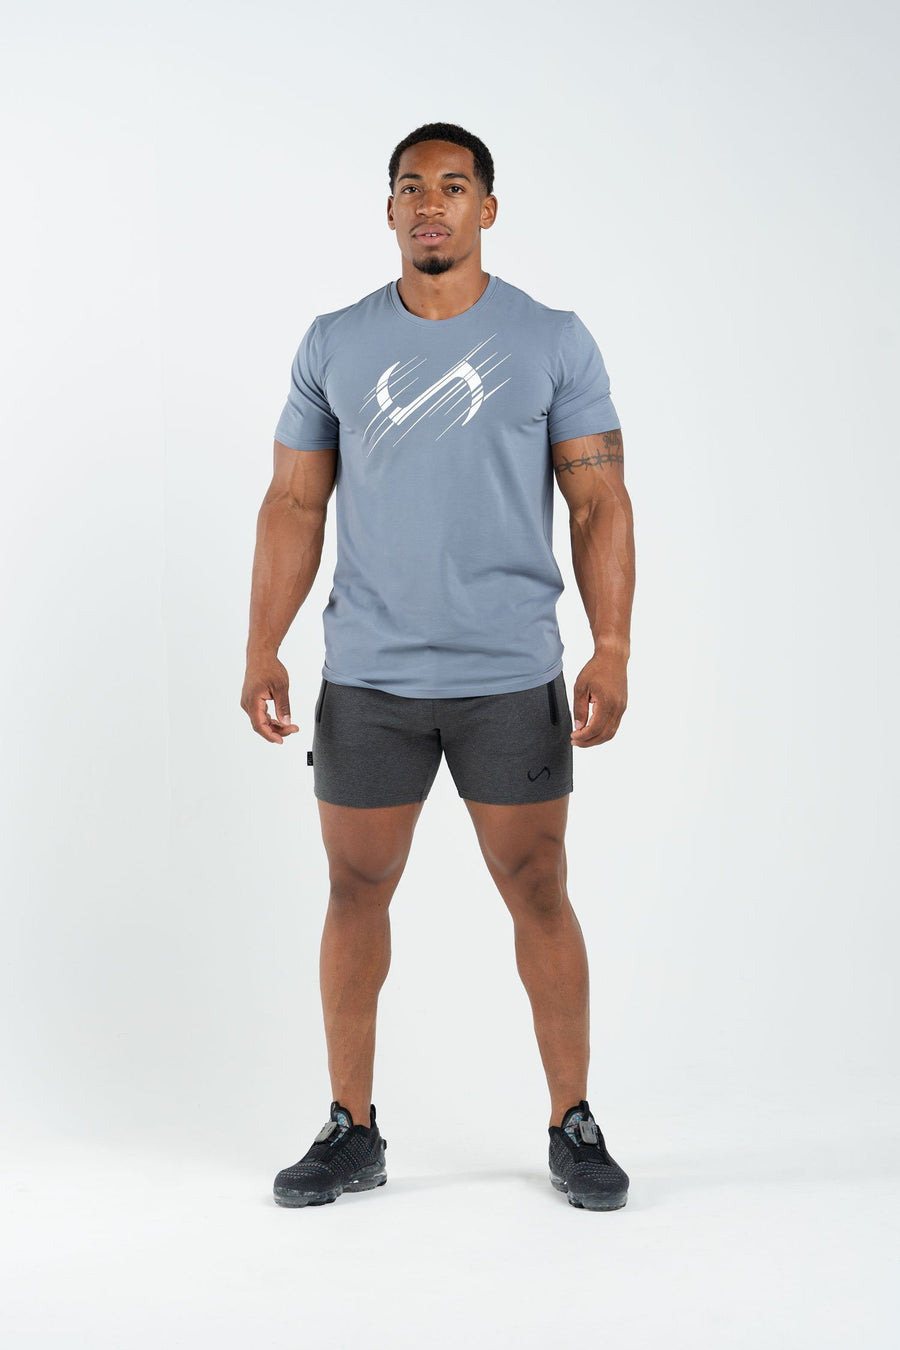 TLF Lift Gym T-Shirt - Gym T Shirt - Gray 4